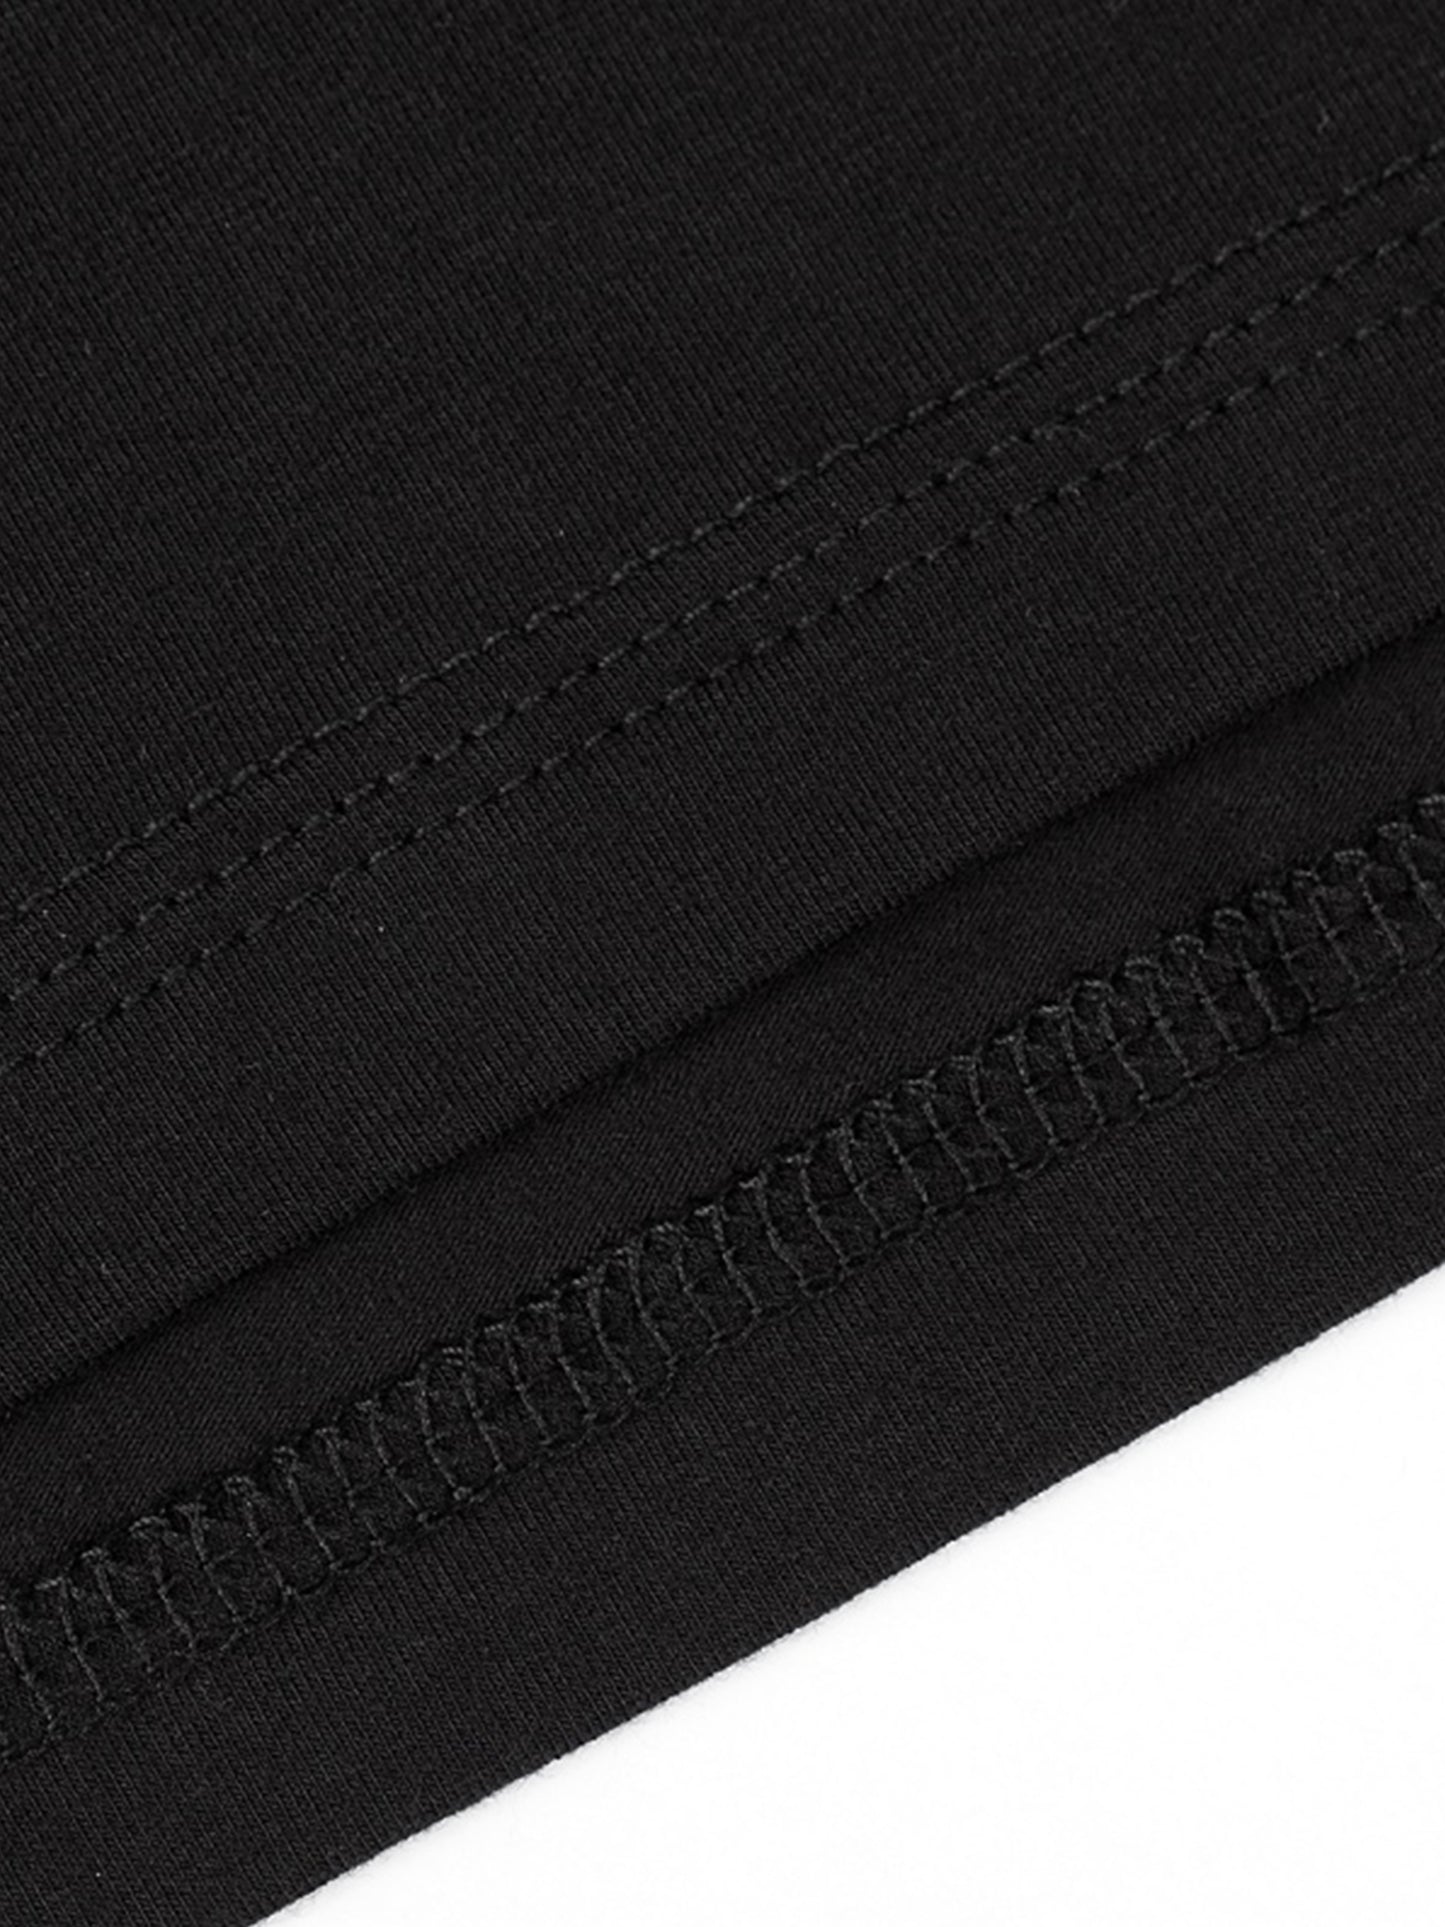 Long sleeve functional bamboo T-shirt black - Winged Wheel